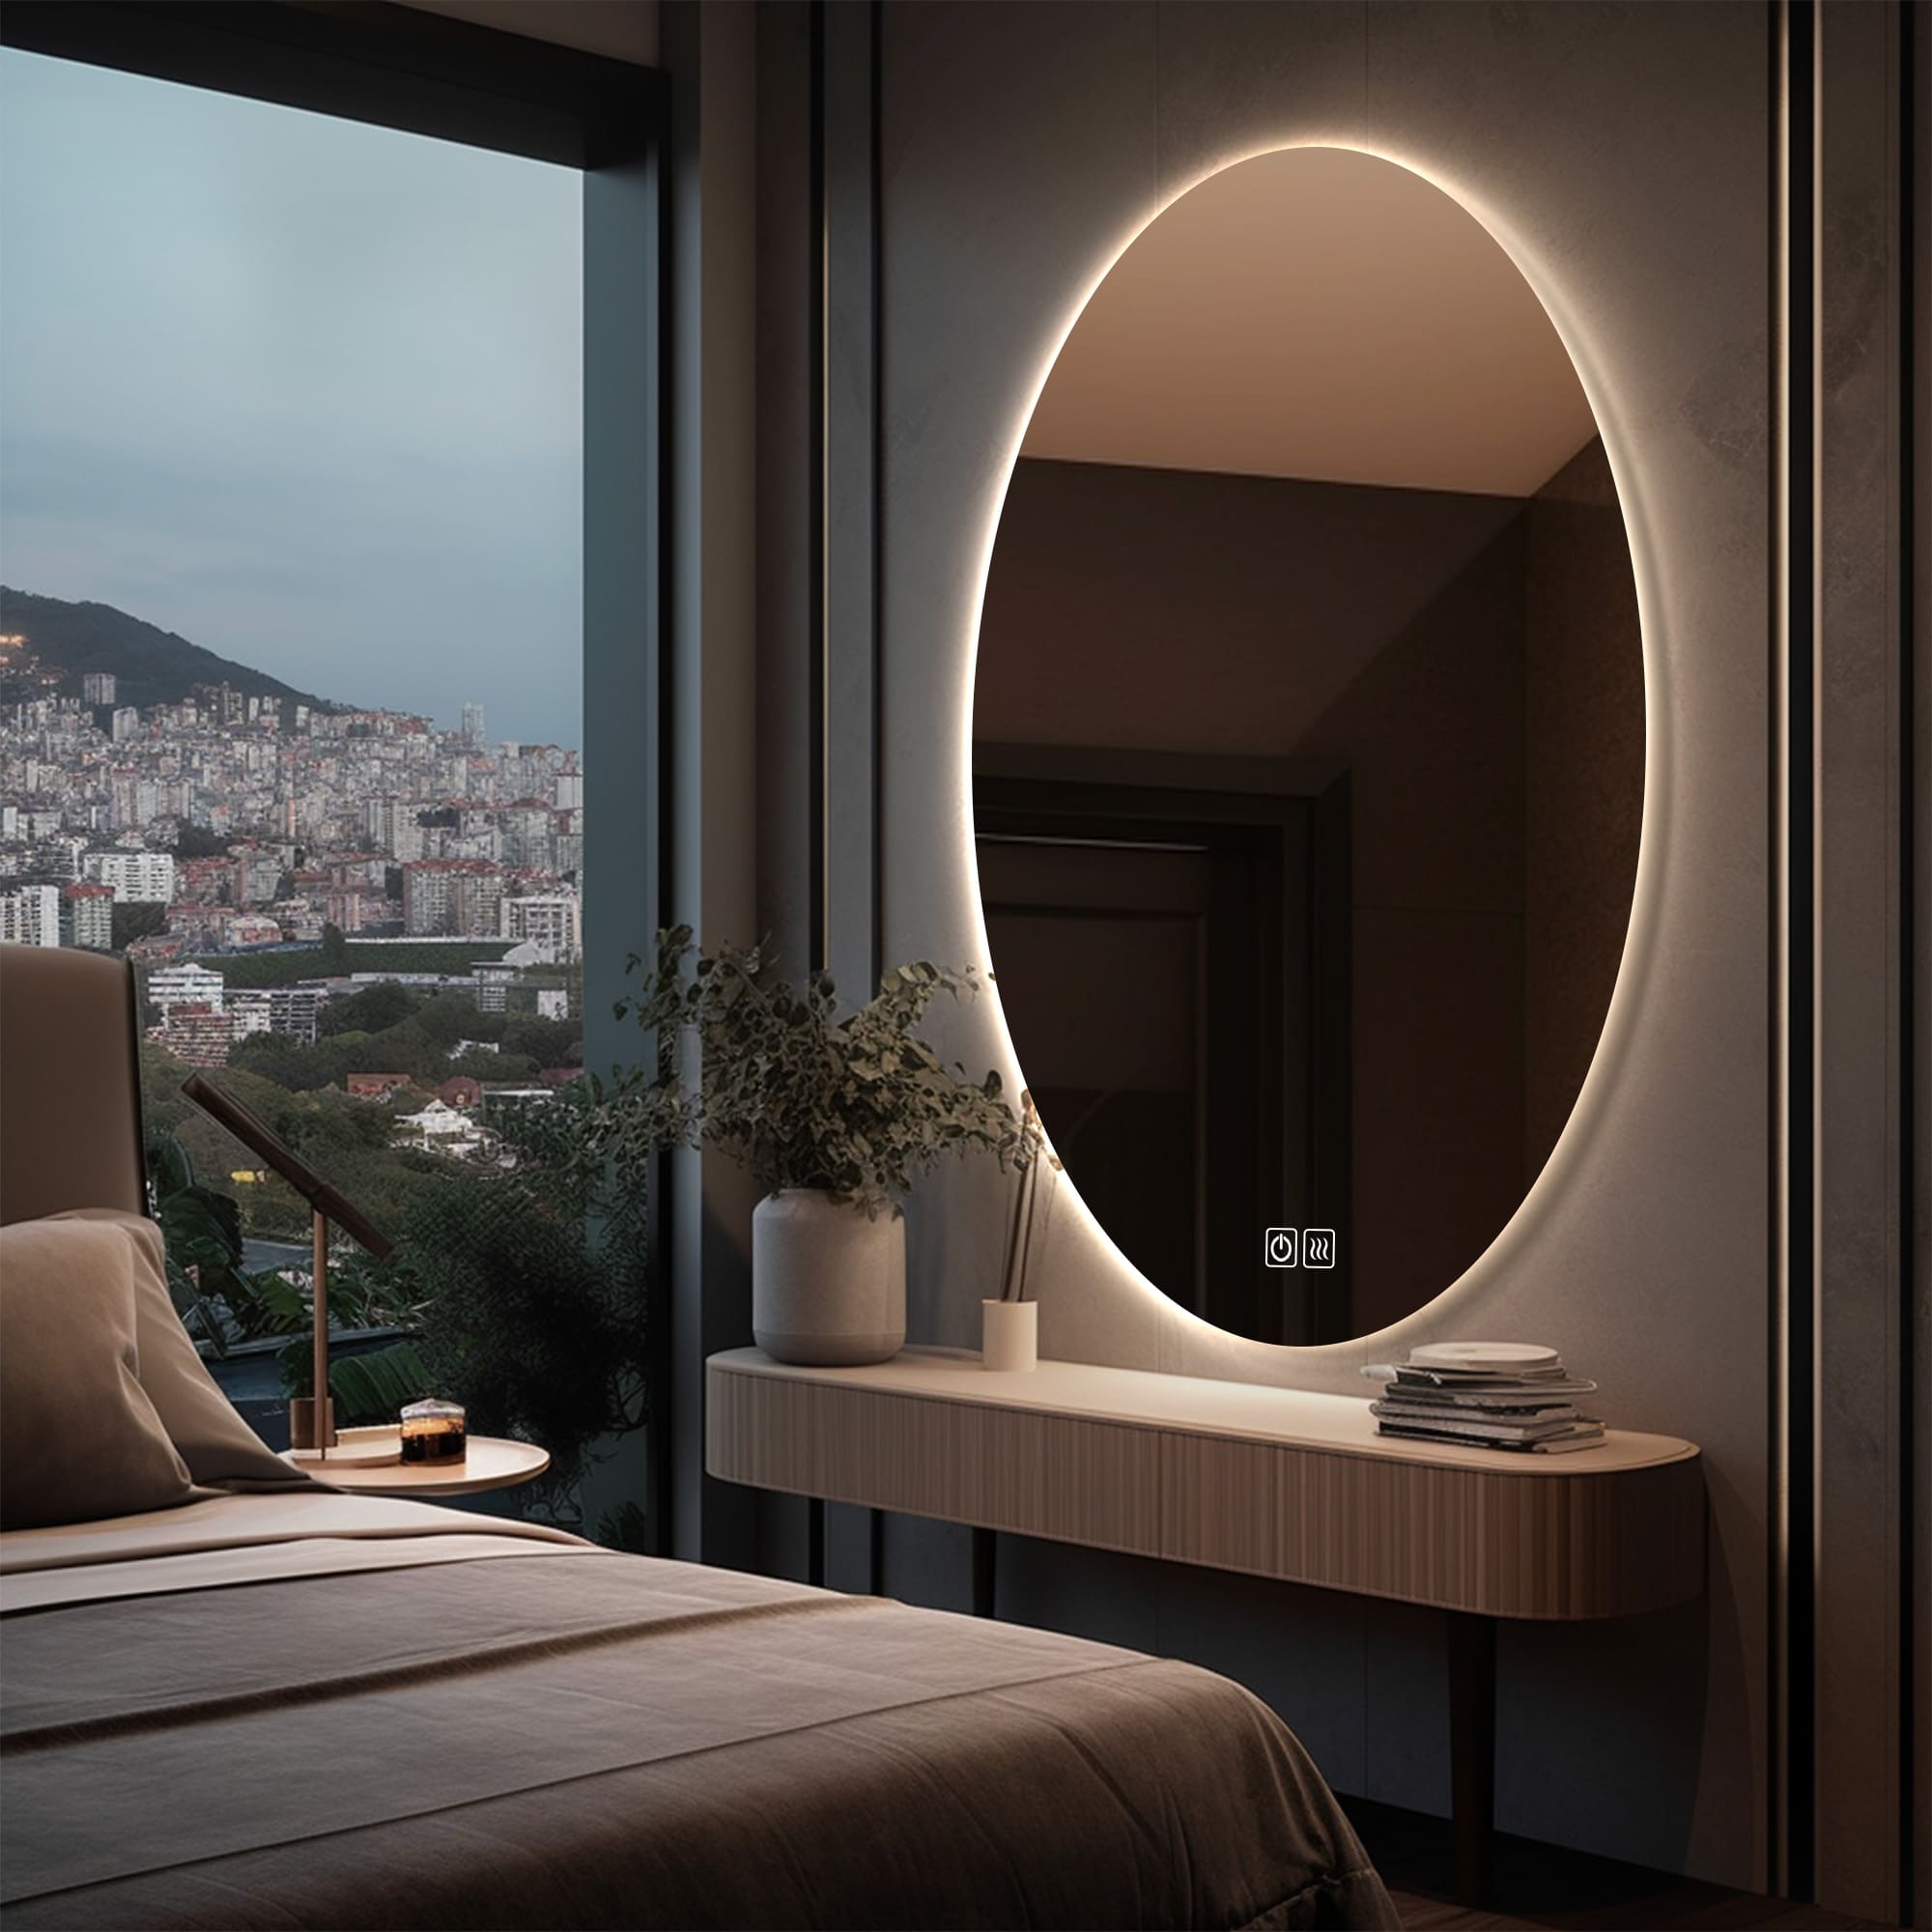 Ceres LED Mirror for bedroom 4000k backlight